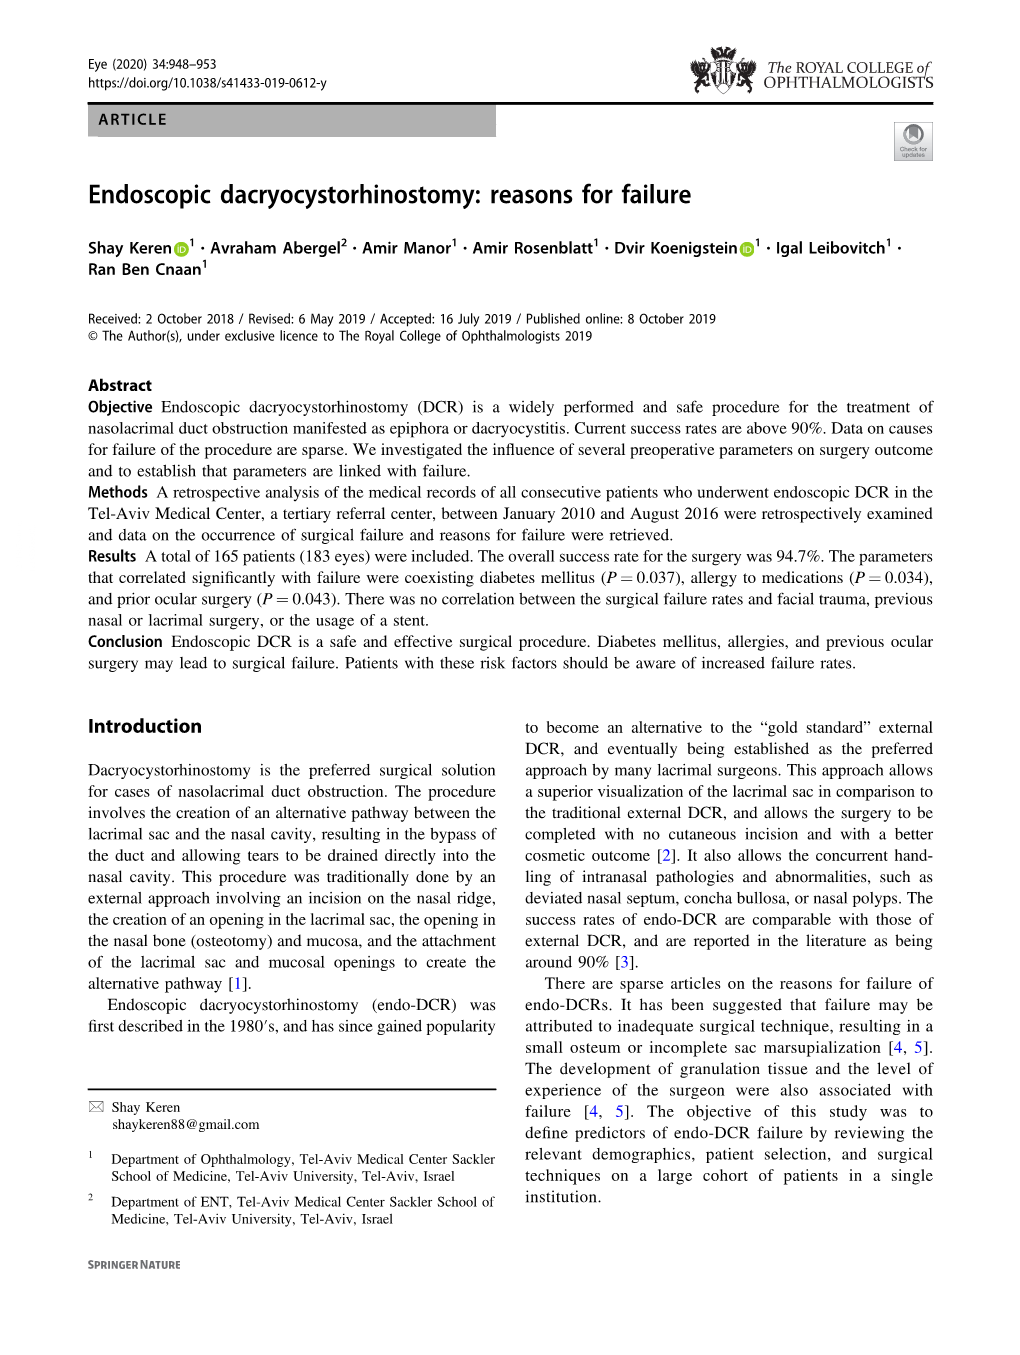 Endoscopic Dacryocystorhinostomy: Reasons for Failure